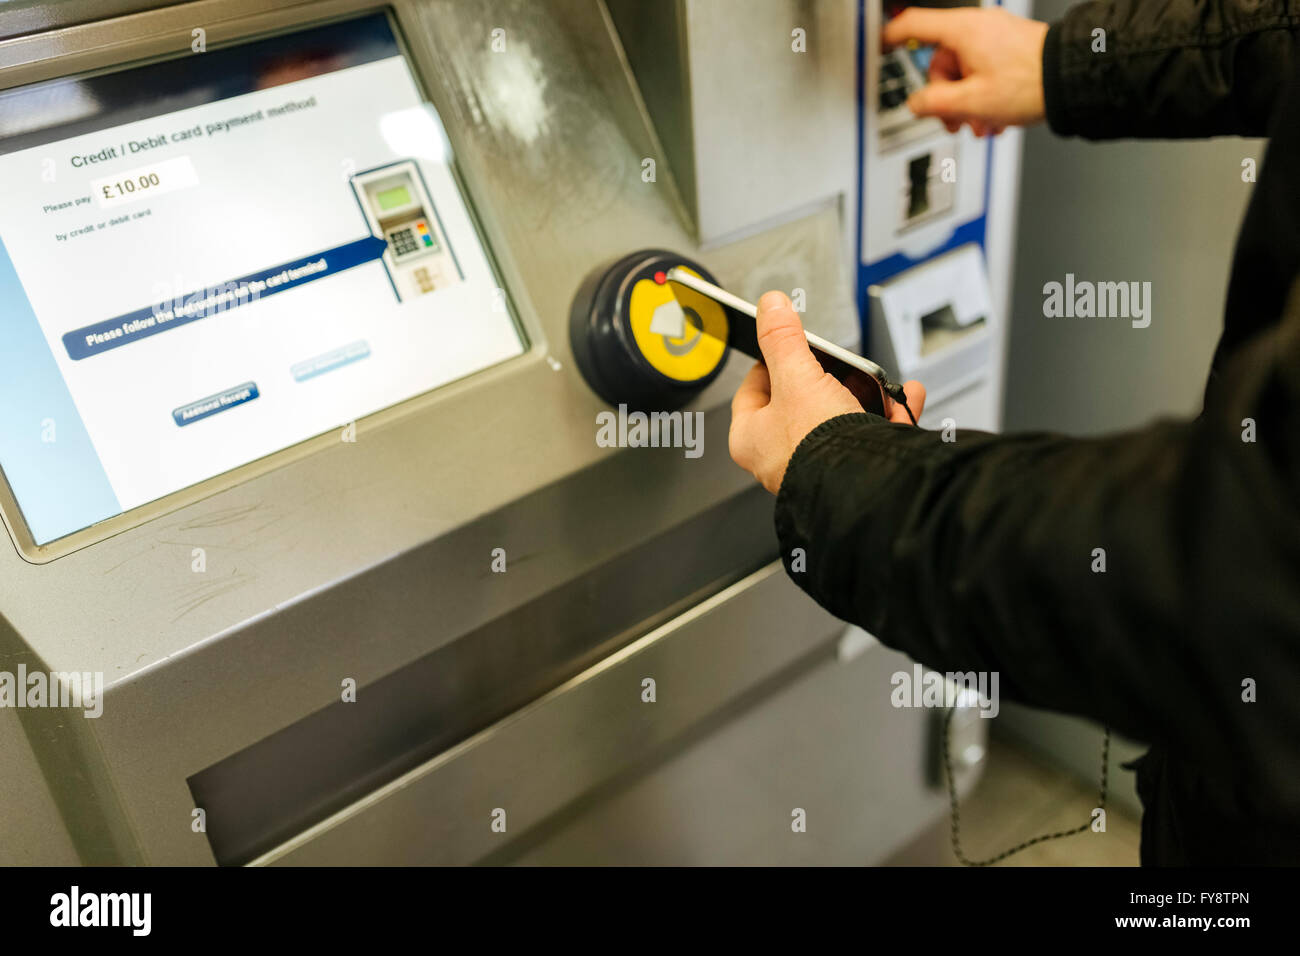 UK, London, Mann ein Ticket am Automaten bargeldlos kaufen Stockfoto